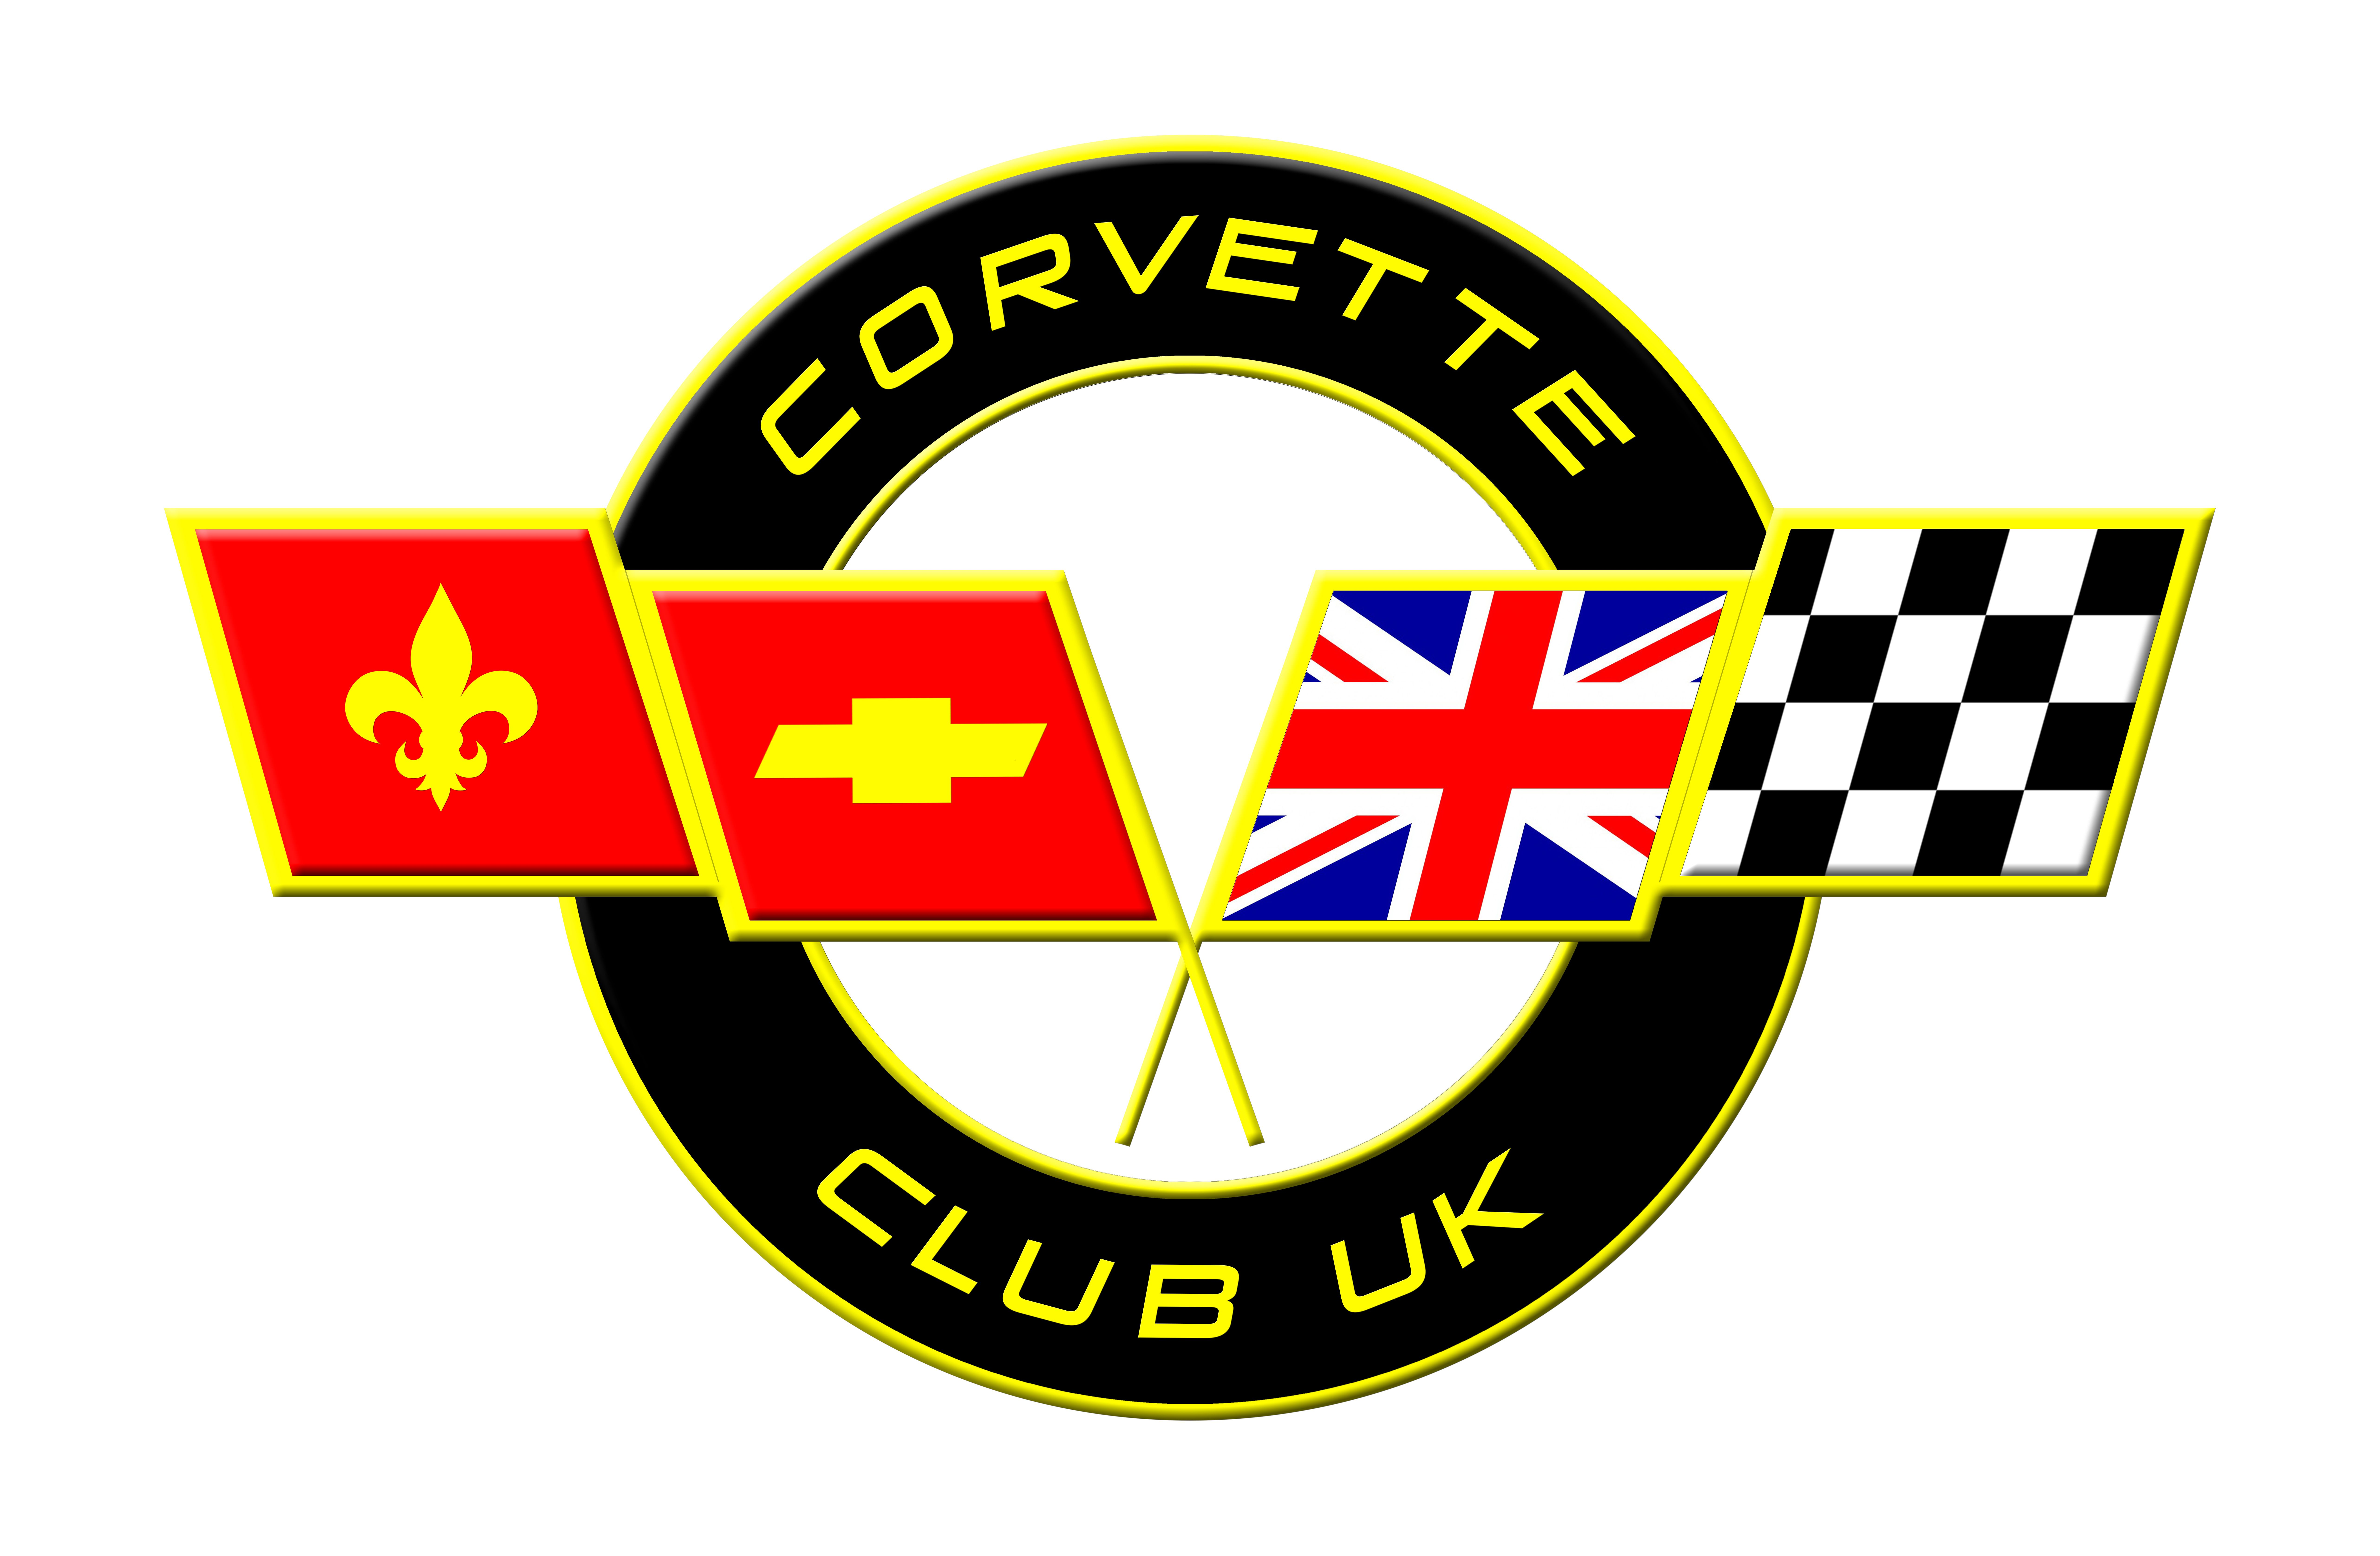 Corvette Club